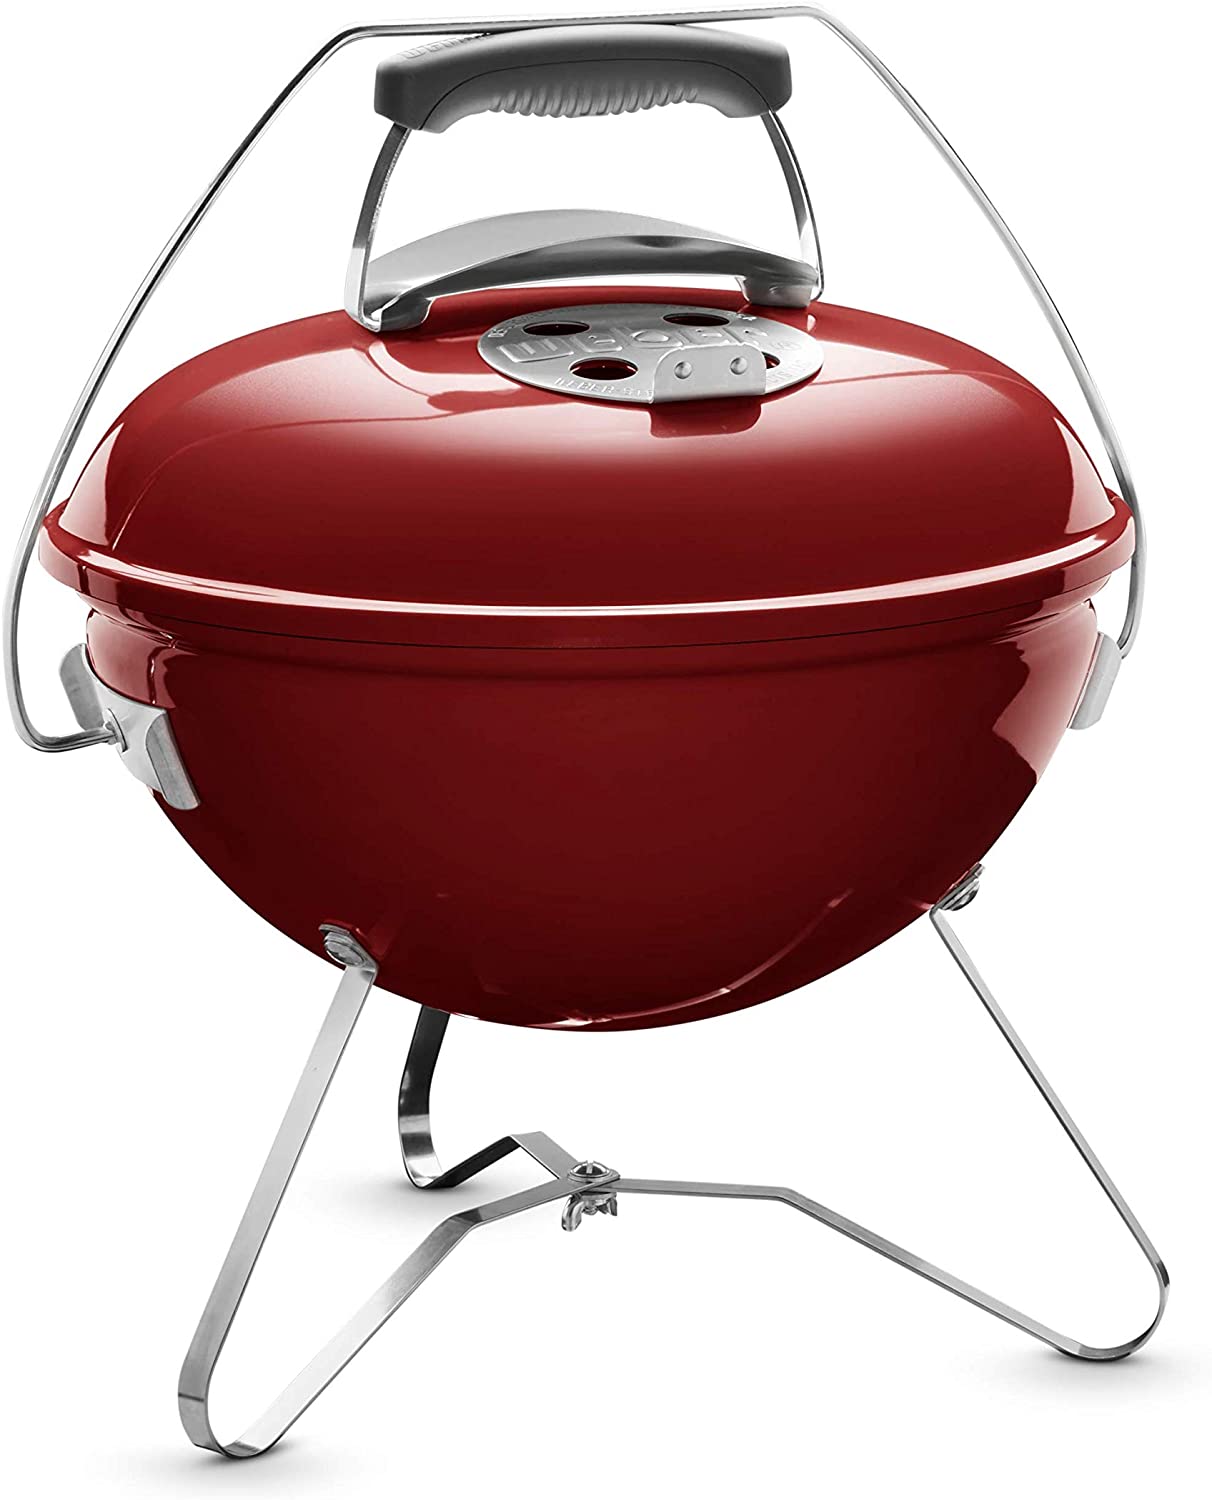 Weber Smokey Joe charcoal barbecue, Crimson